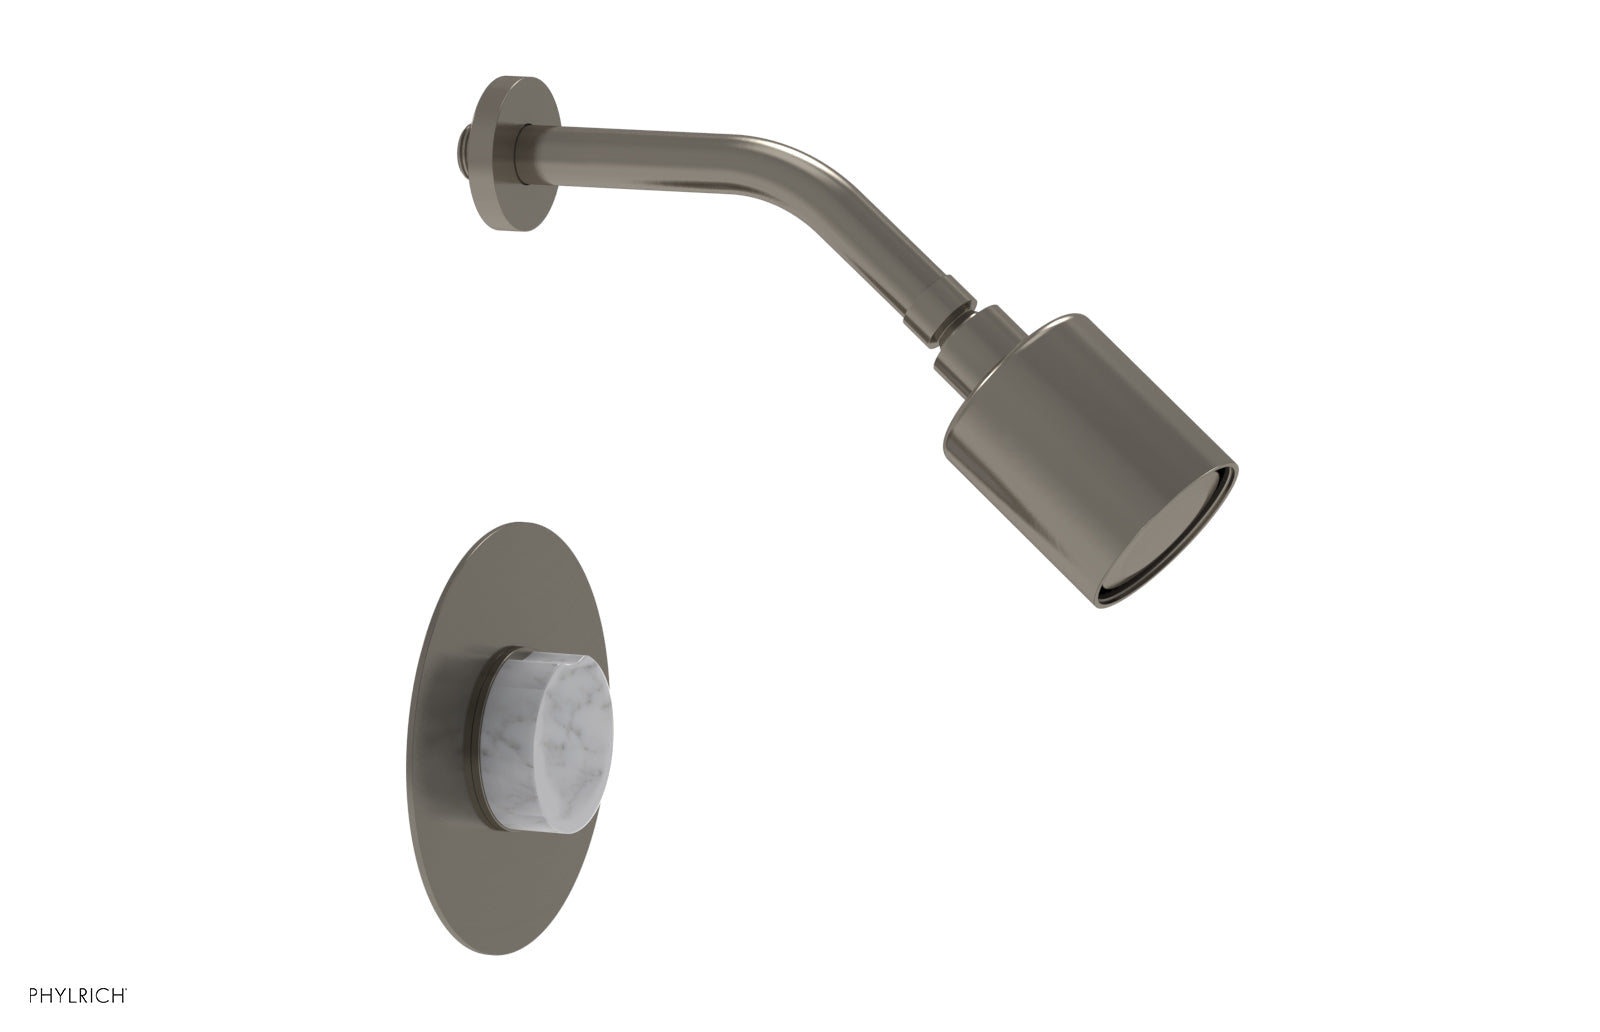 Phylrich CIRC Pressure Balance Shower Set - White Marble Handle